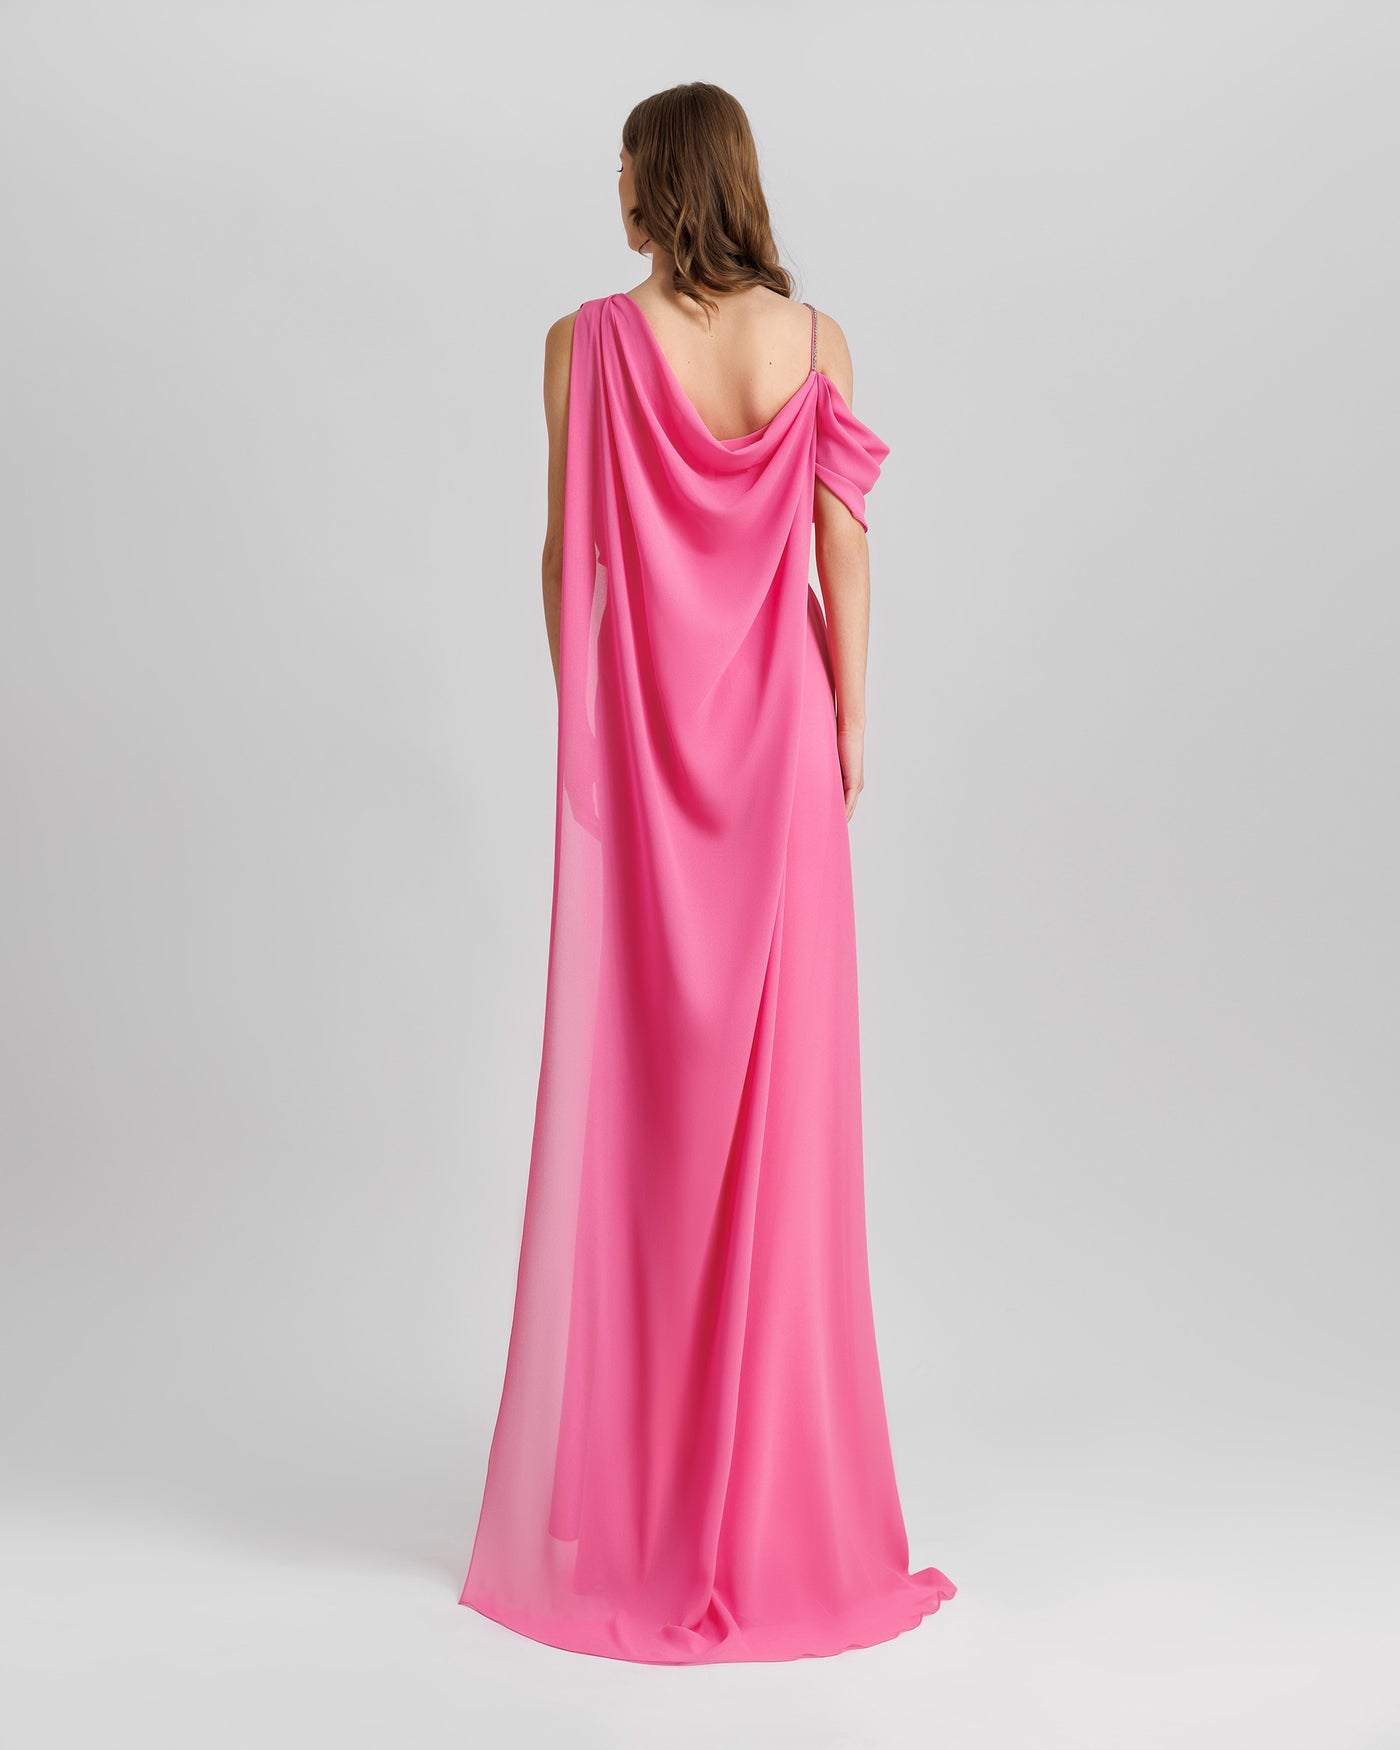 Asymmetrical Neckline Candy Pink Dress